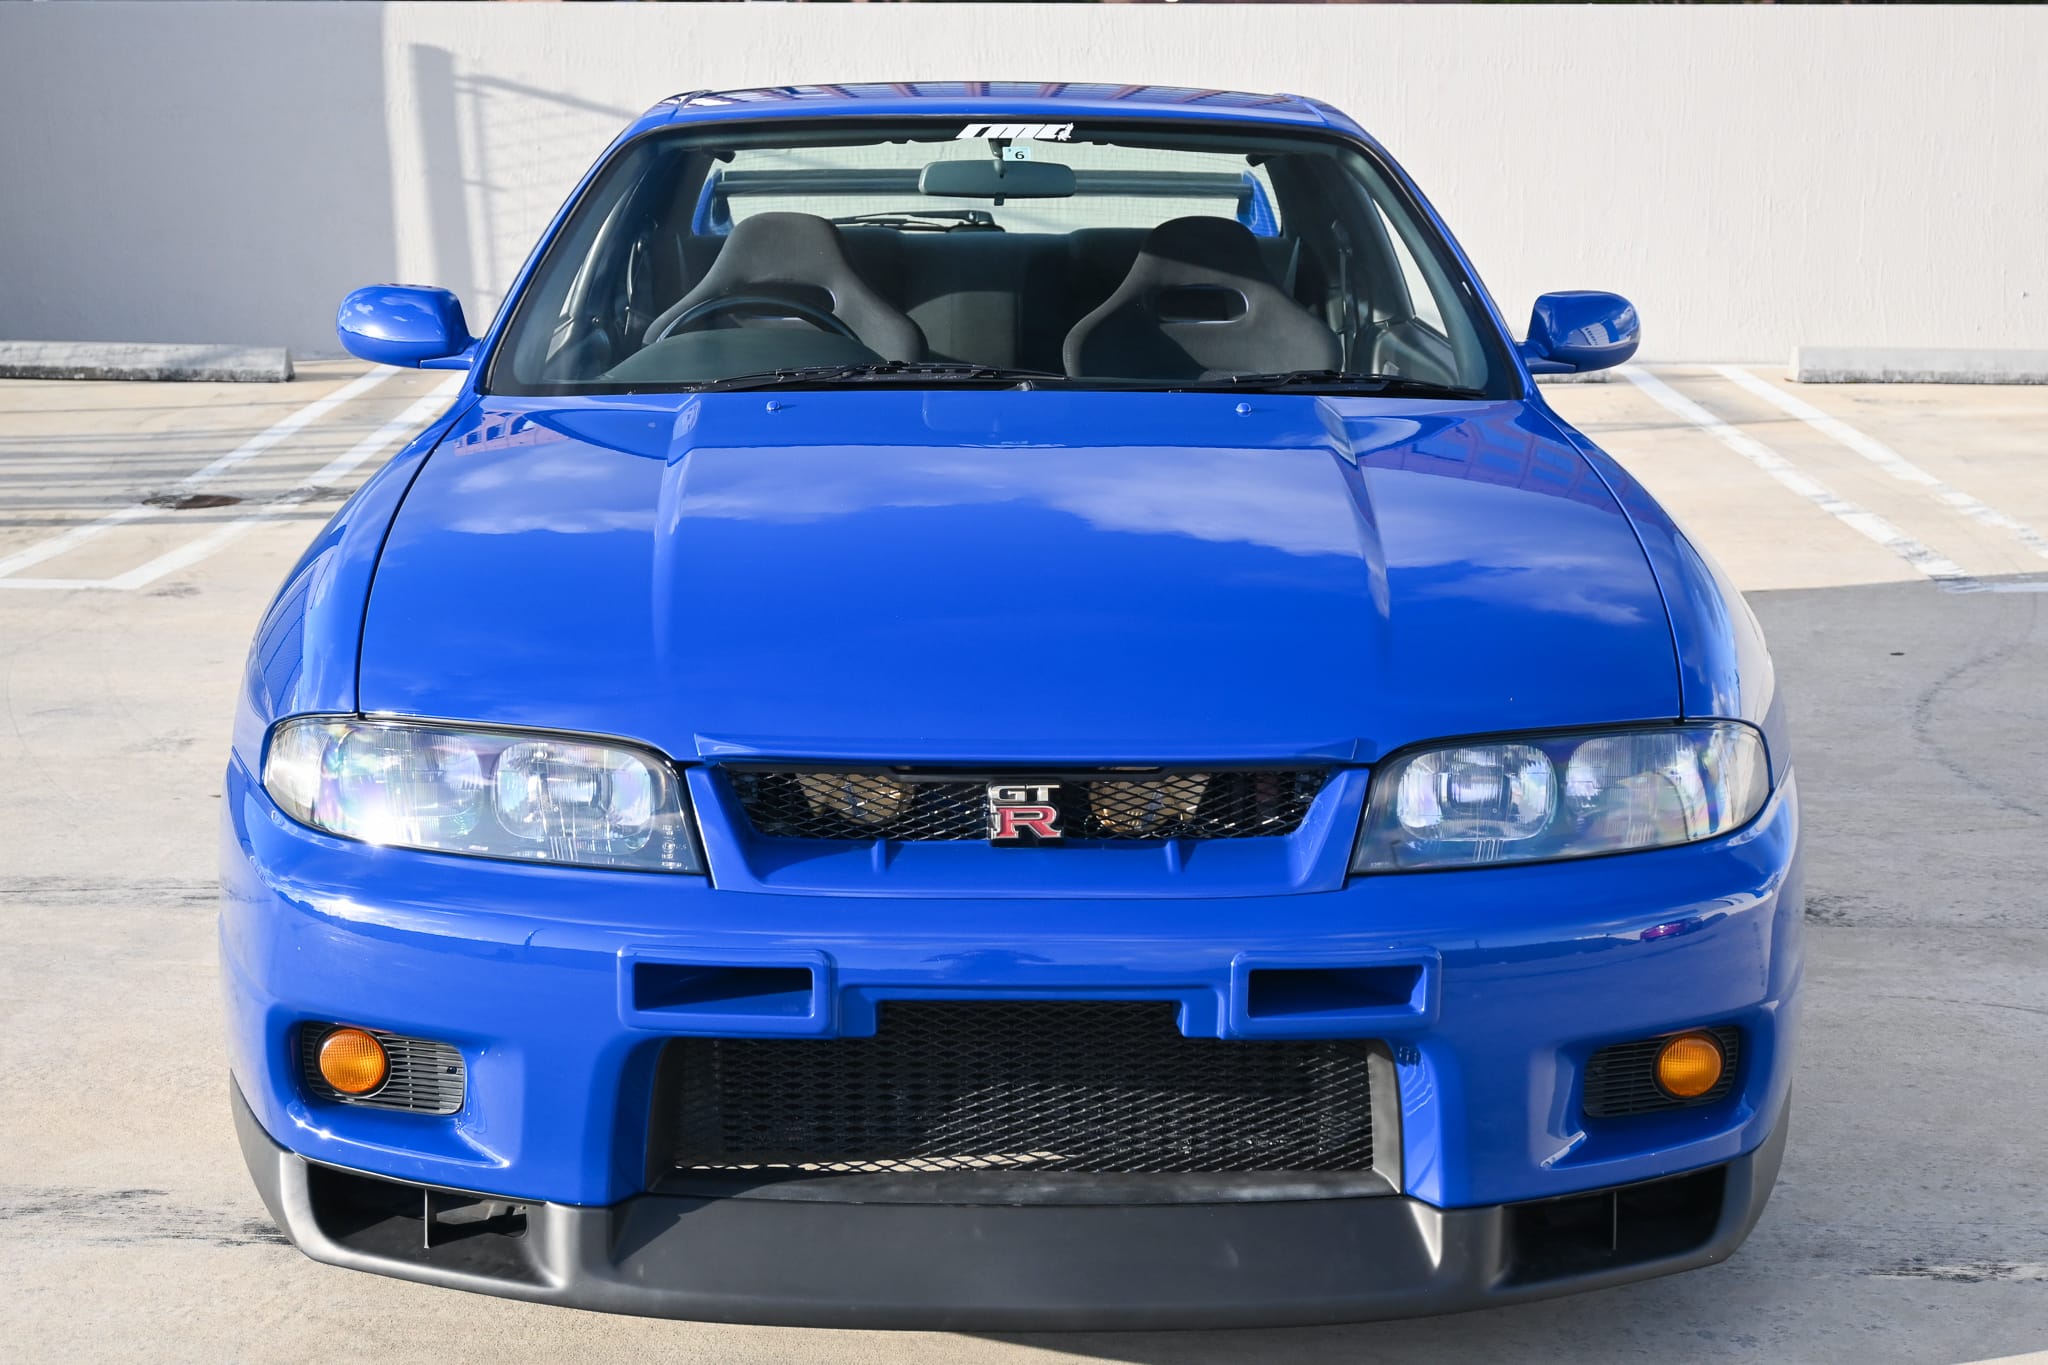 1996 Nissan Skyline GT-R (R33) LM Limited | 1 of 188 LM Limited | Rare BT2 Championship Blue | Lightly Tuned | HKS